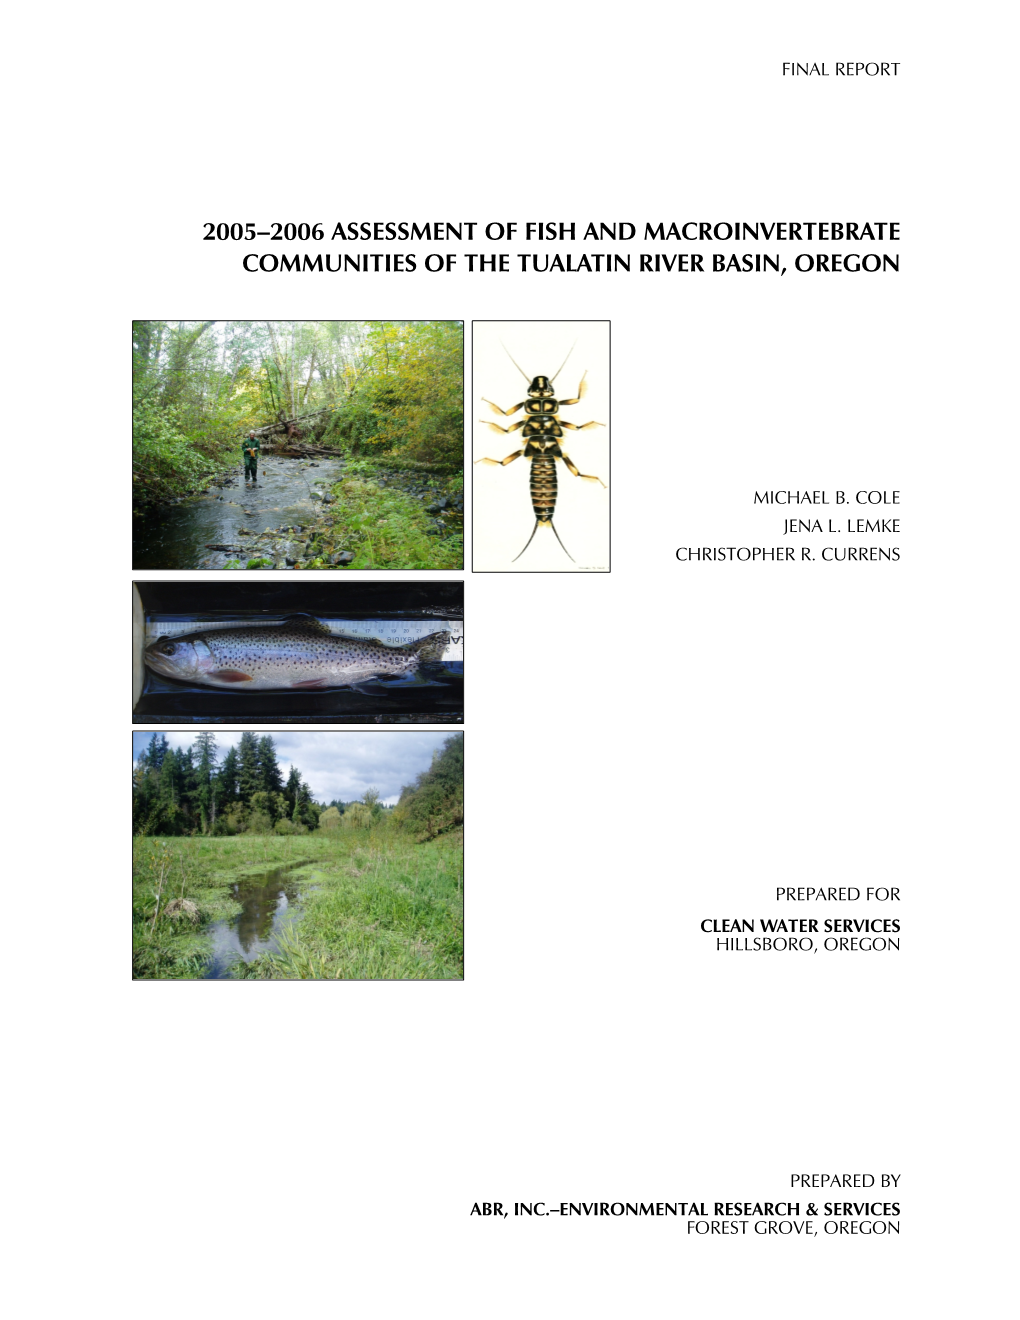 2005–2006 Assessment of Fish and Macroinvertebrate Communities of the Tualatin River Basin, Oregon